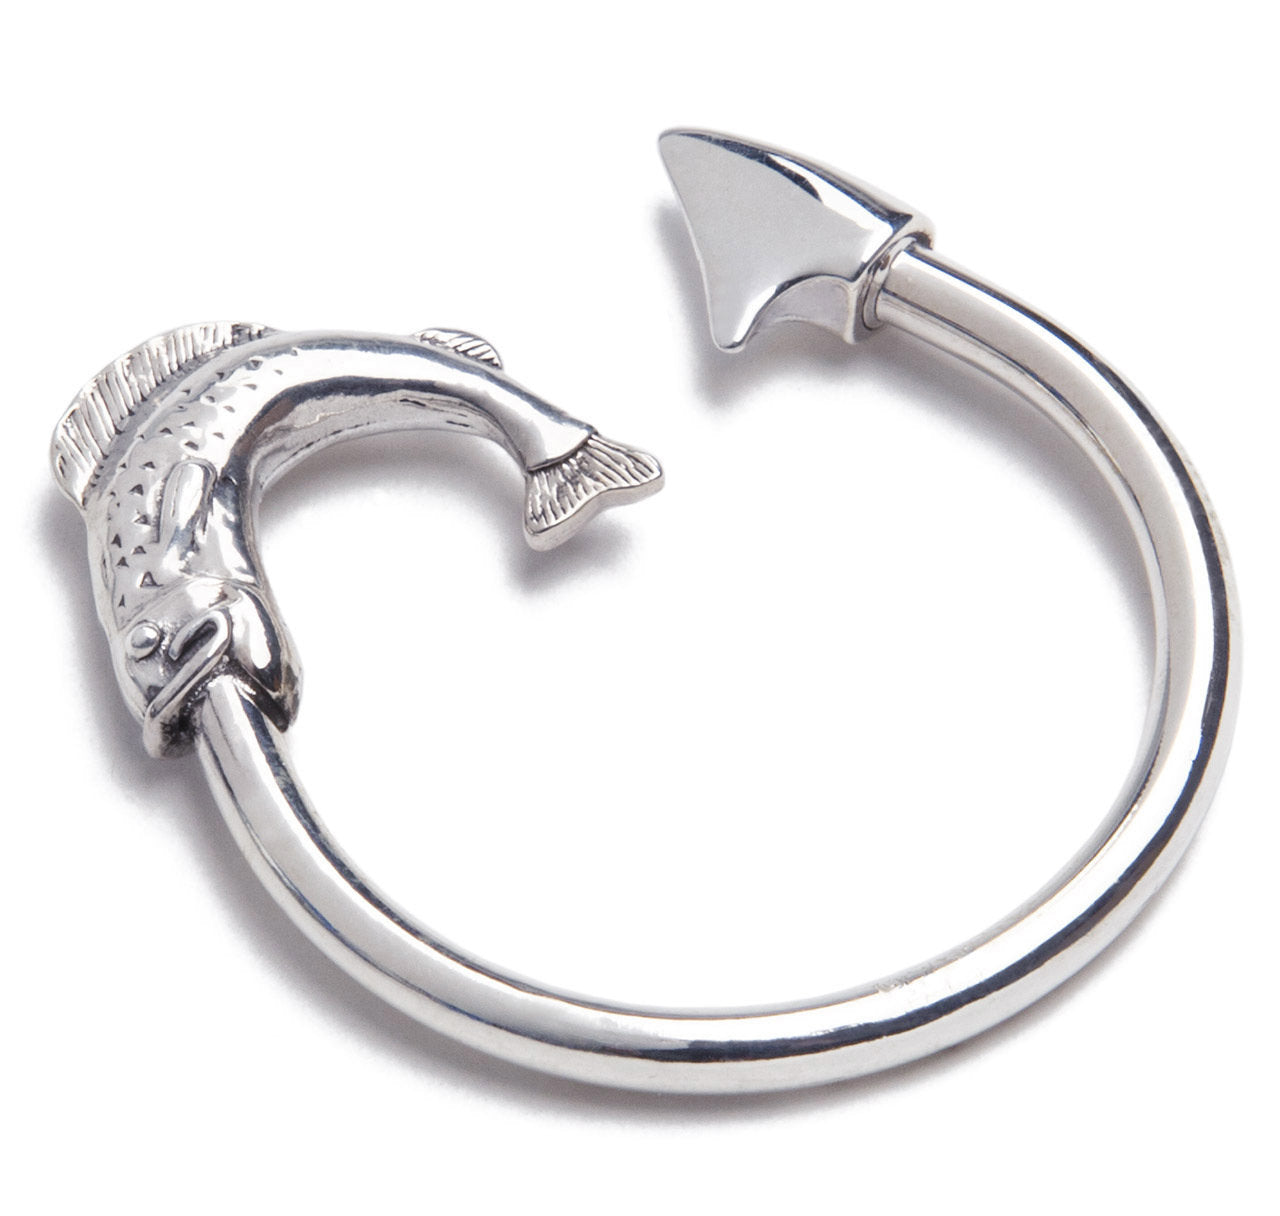 Sir Jack's Sterling Fish & Hook Key Ring